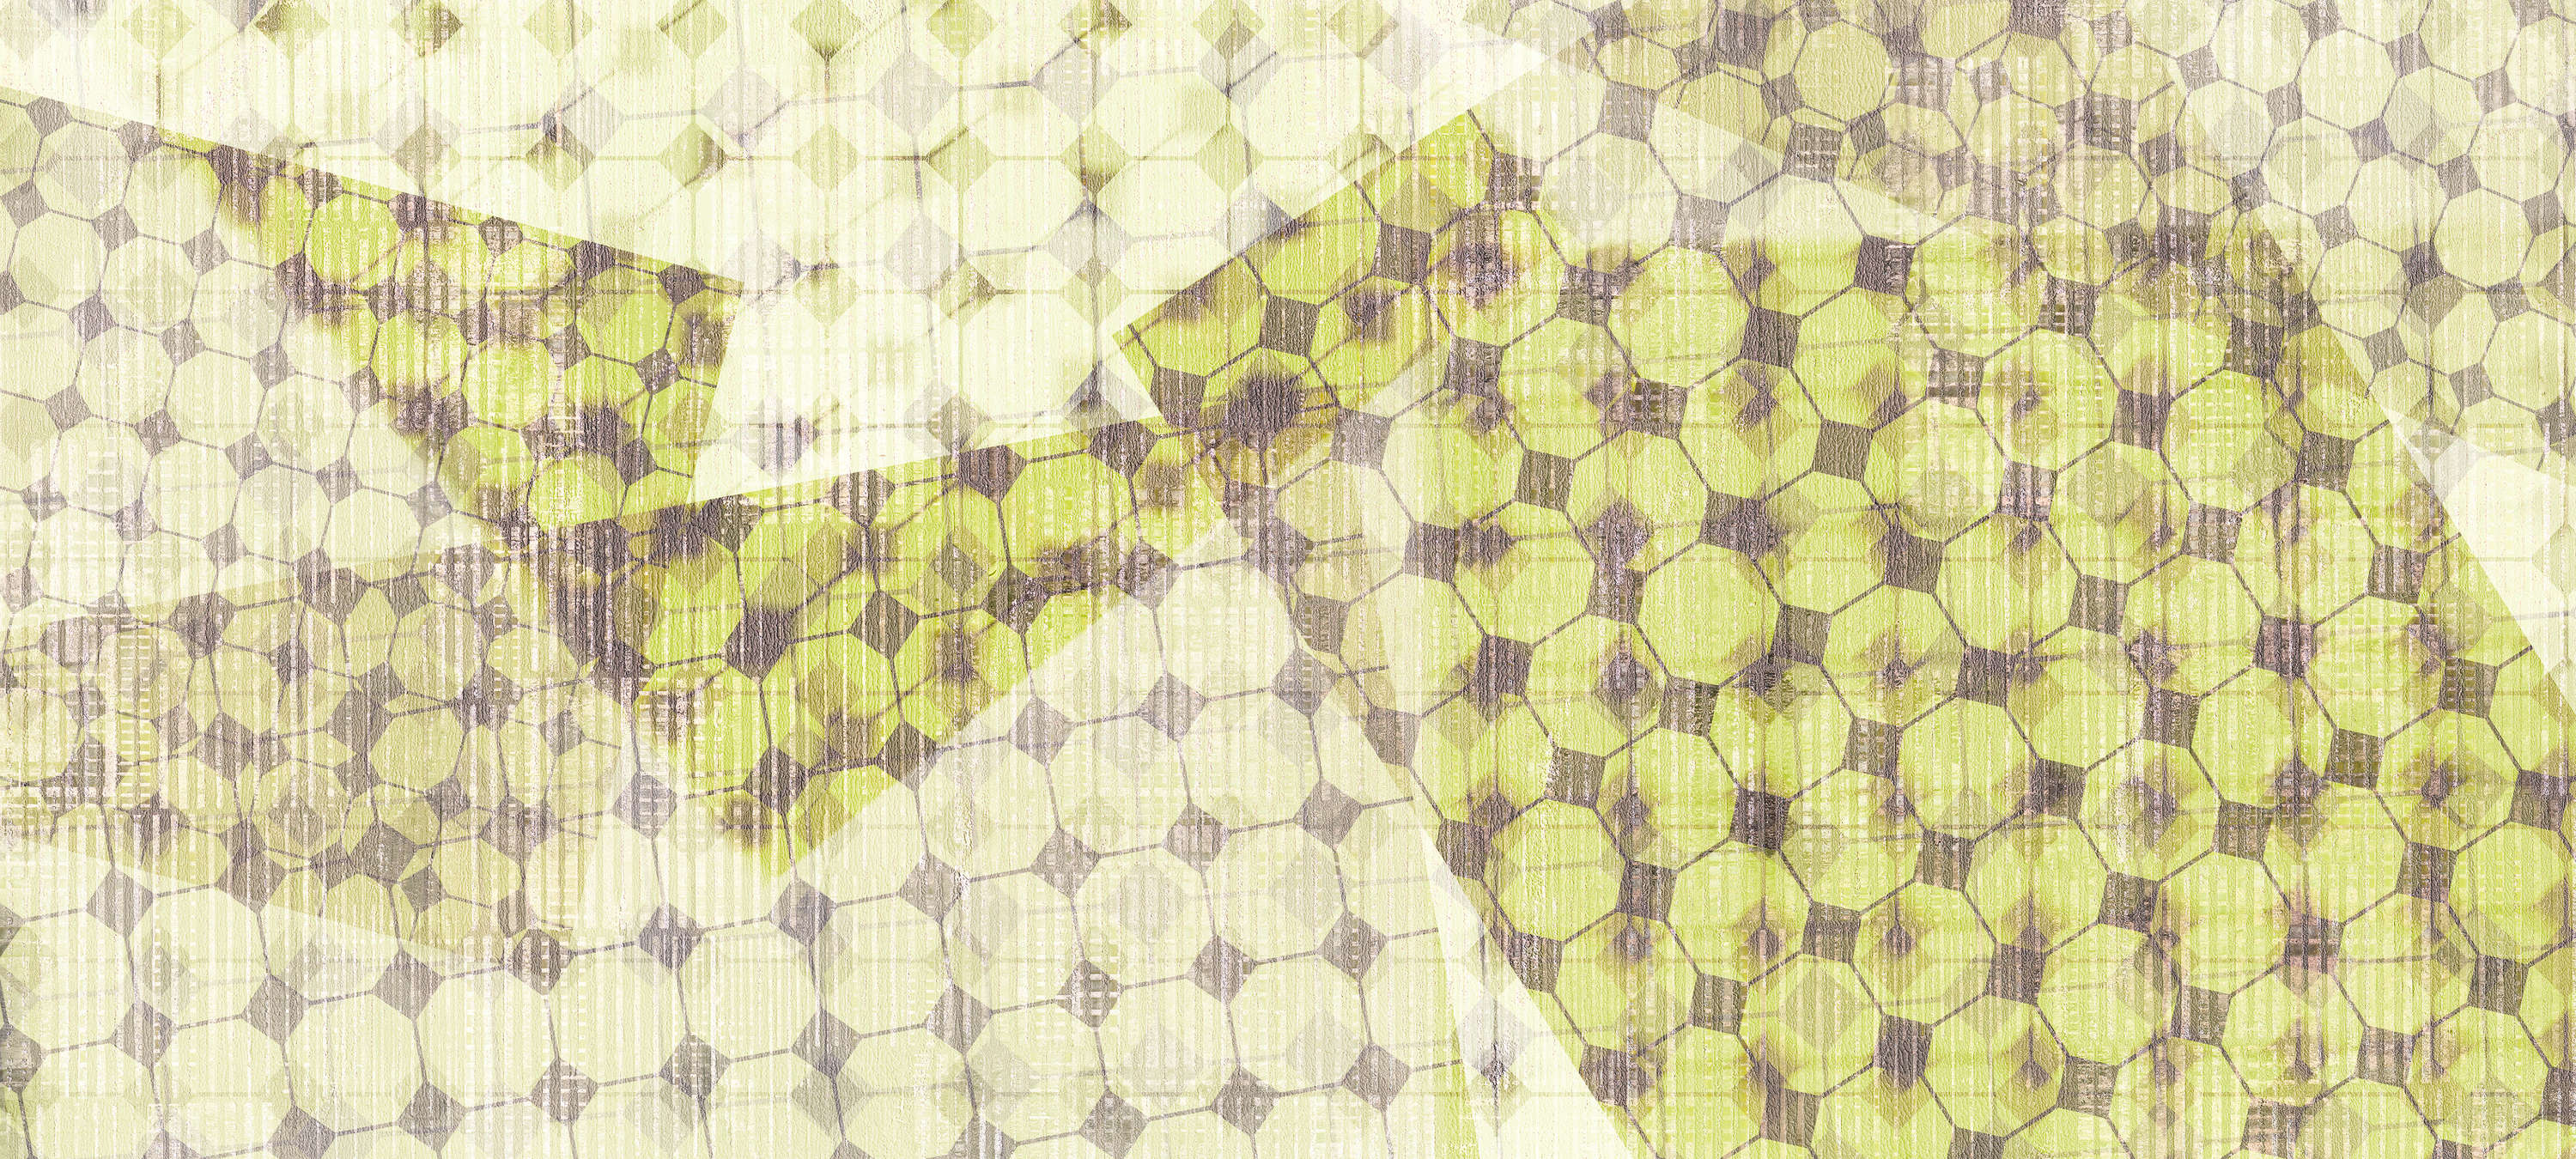             Muurschildering geometrisch patroon & laagjeseffect - Groen, Wit, Zwart
        